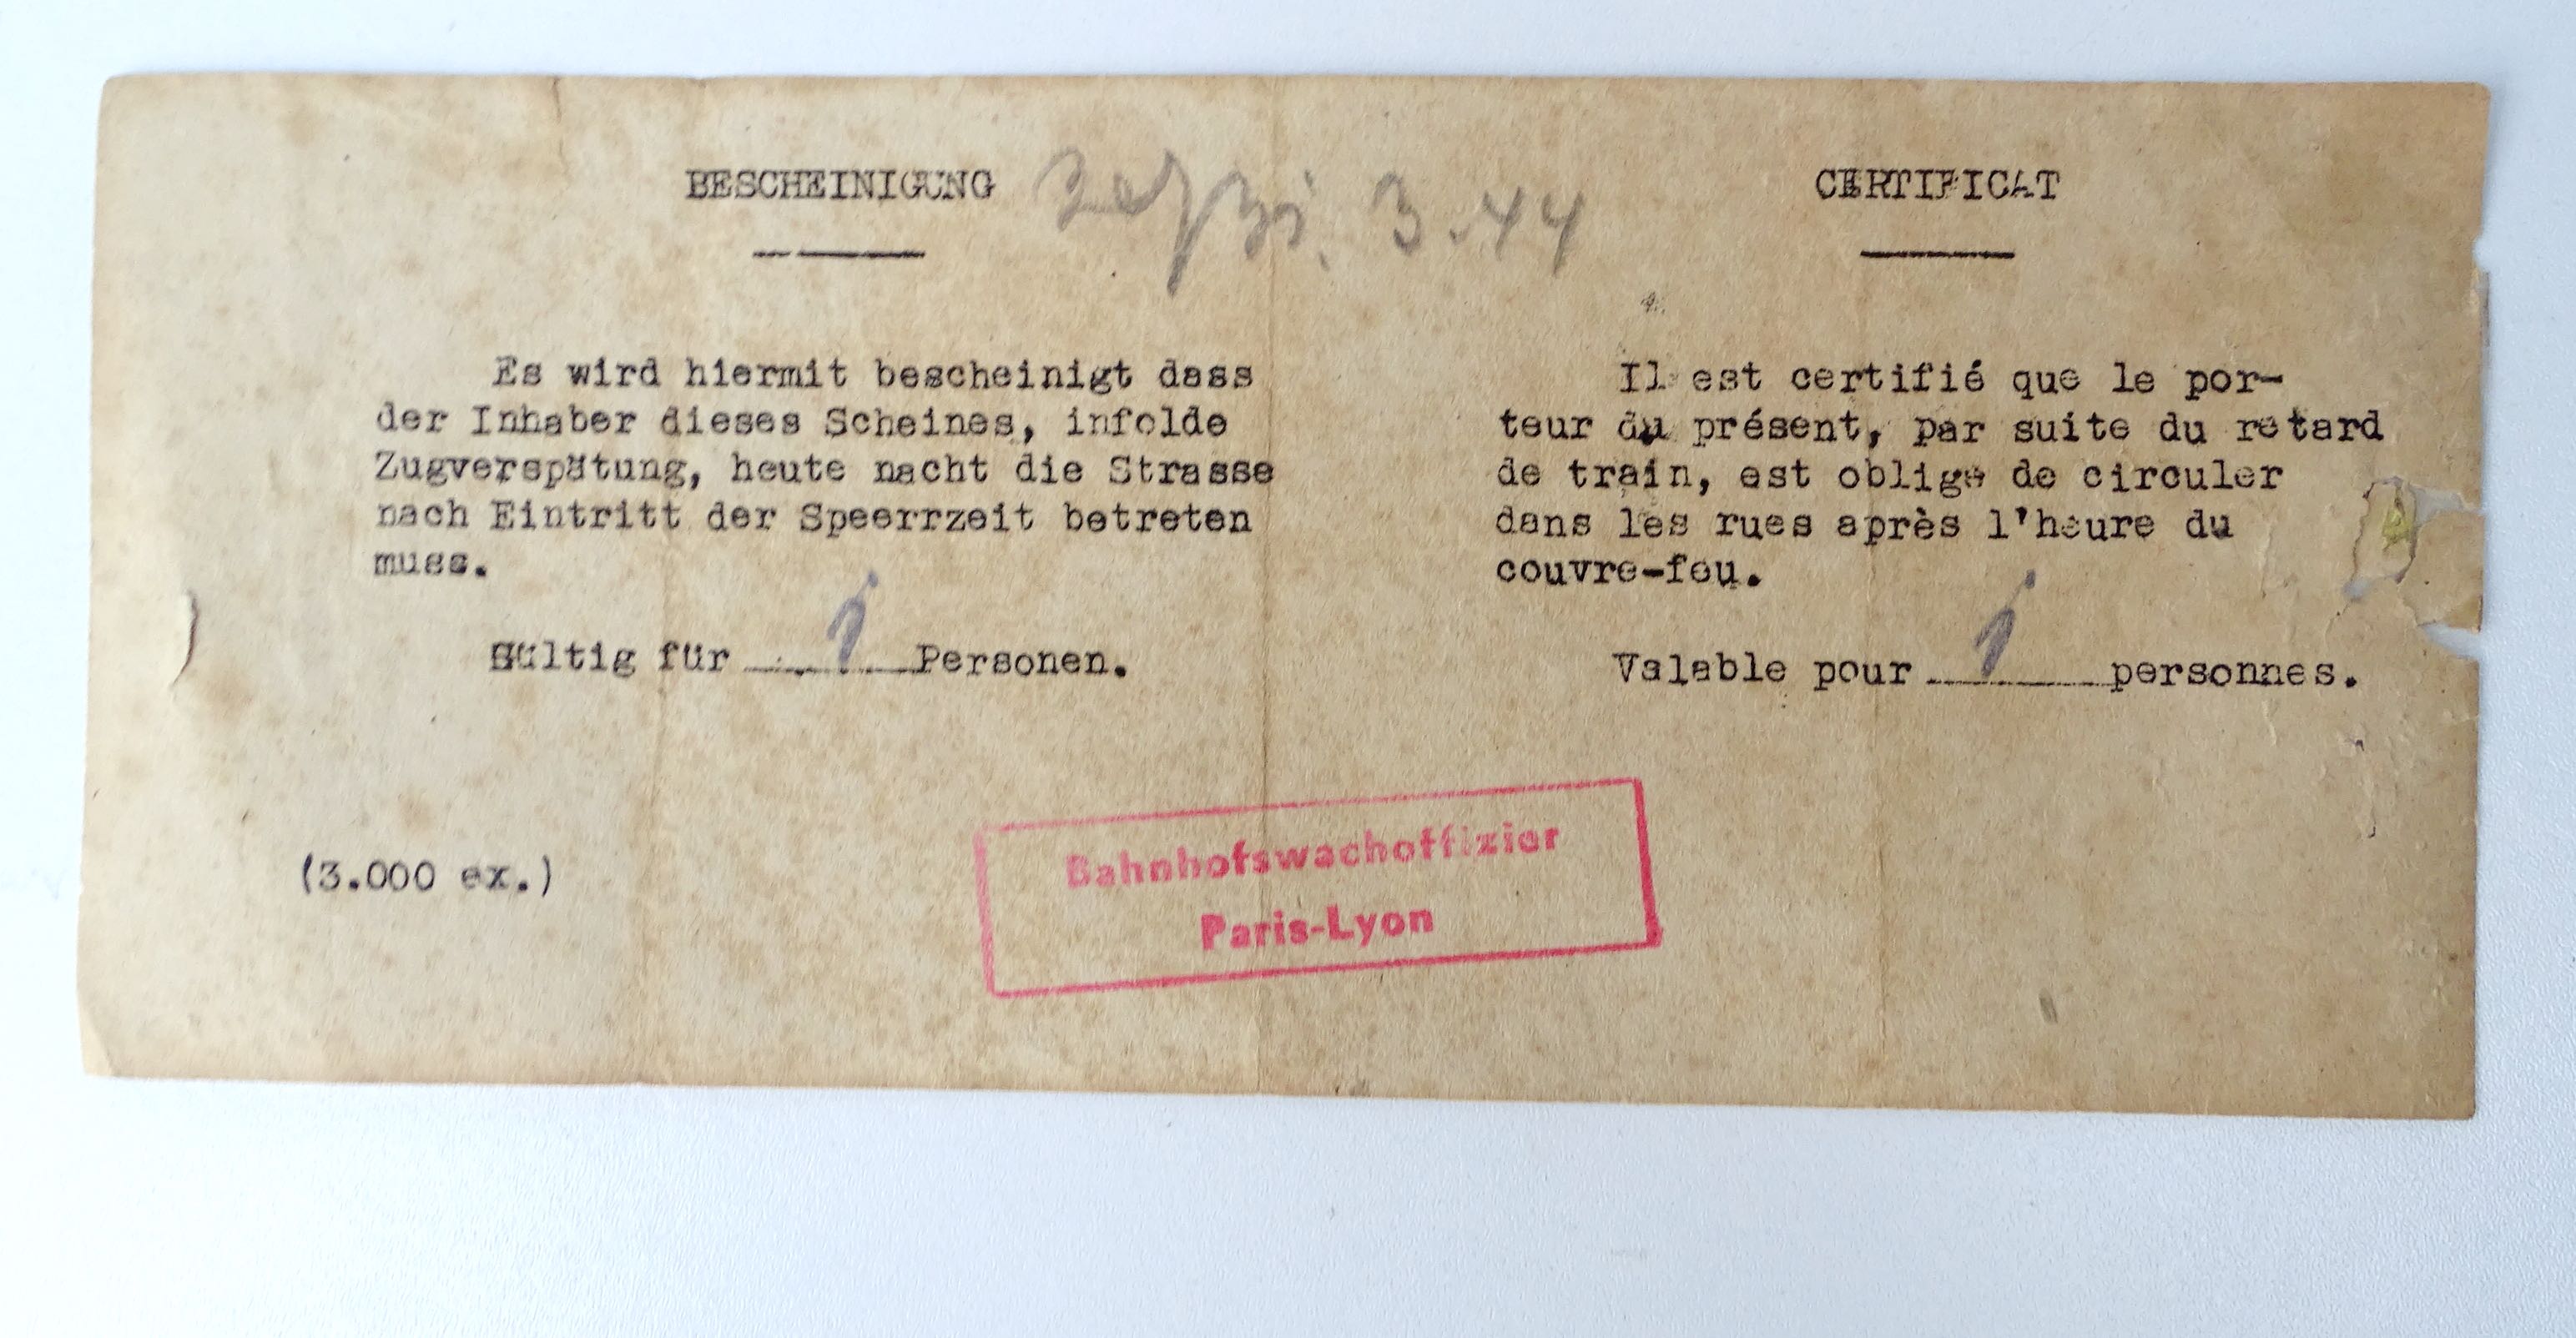 Certificat de circulation Fran&ccedil;ais / Allemand 1944 Bahnofswachoffizier Paris Lyon